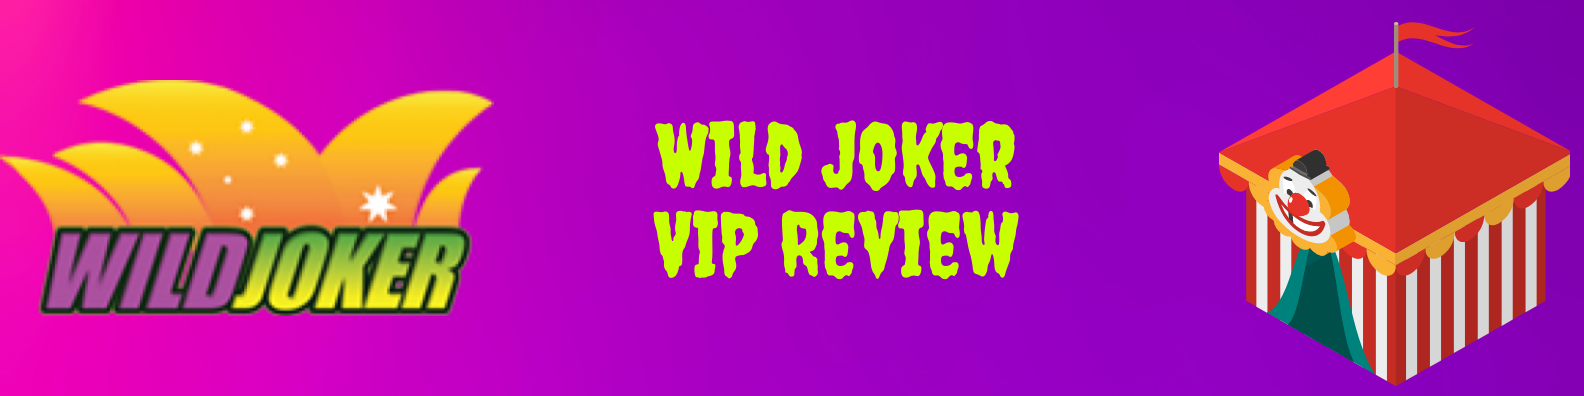 Wild Joker VIP Review